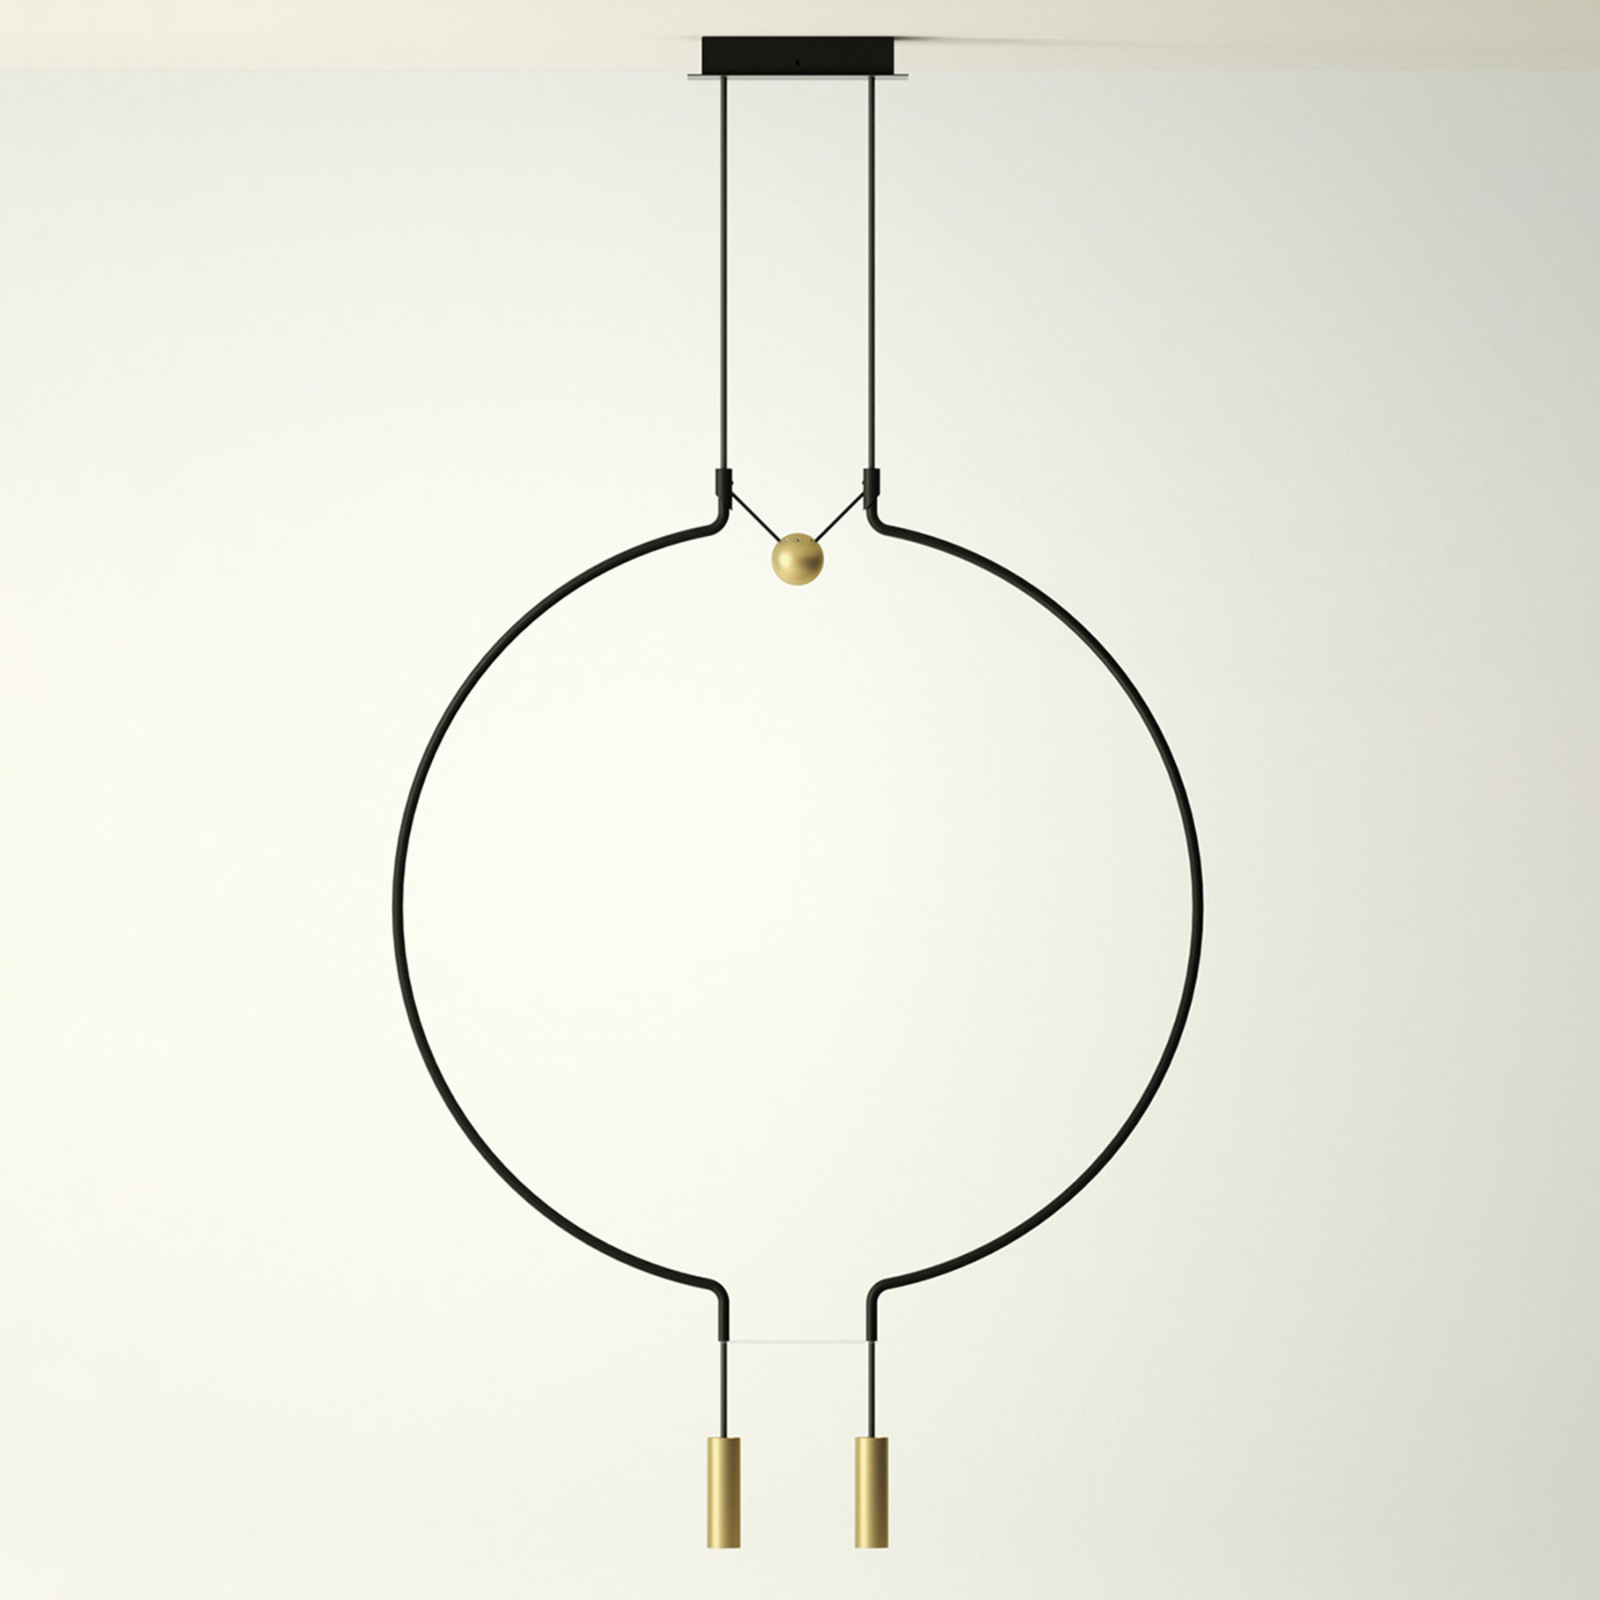 Axolight Liaison M2 hængelampe, sort/guld, 84 cm